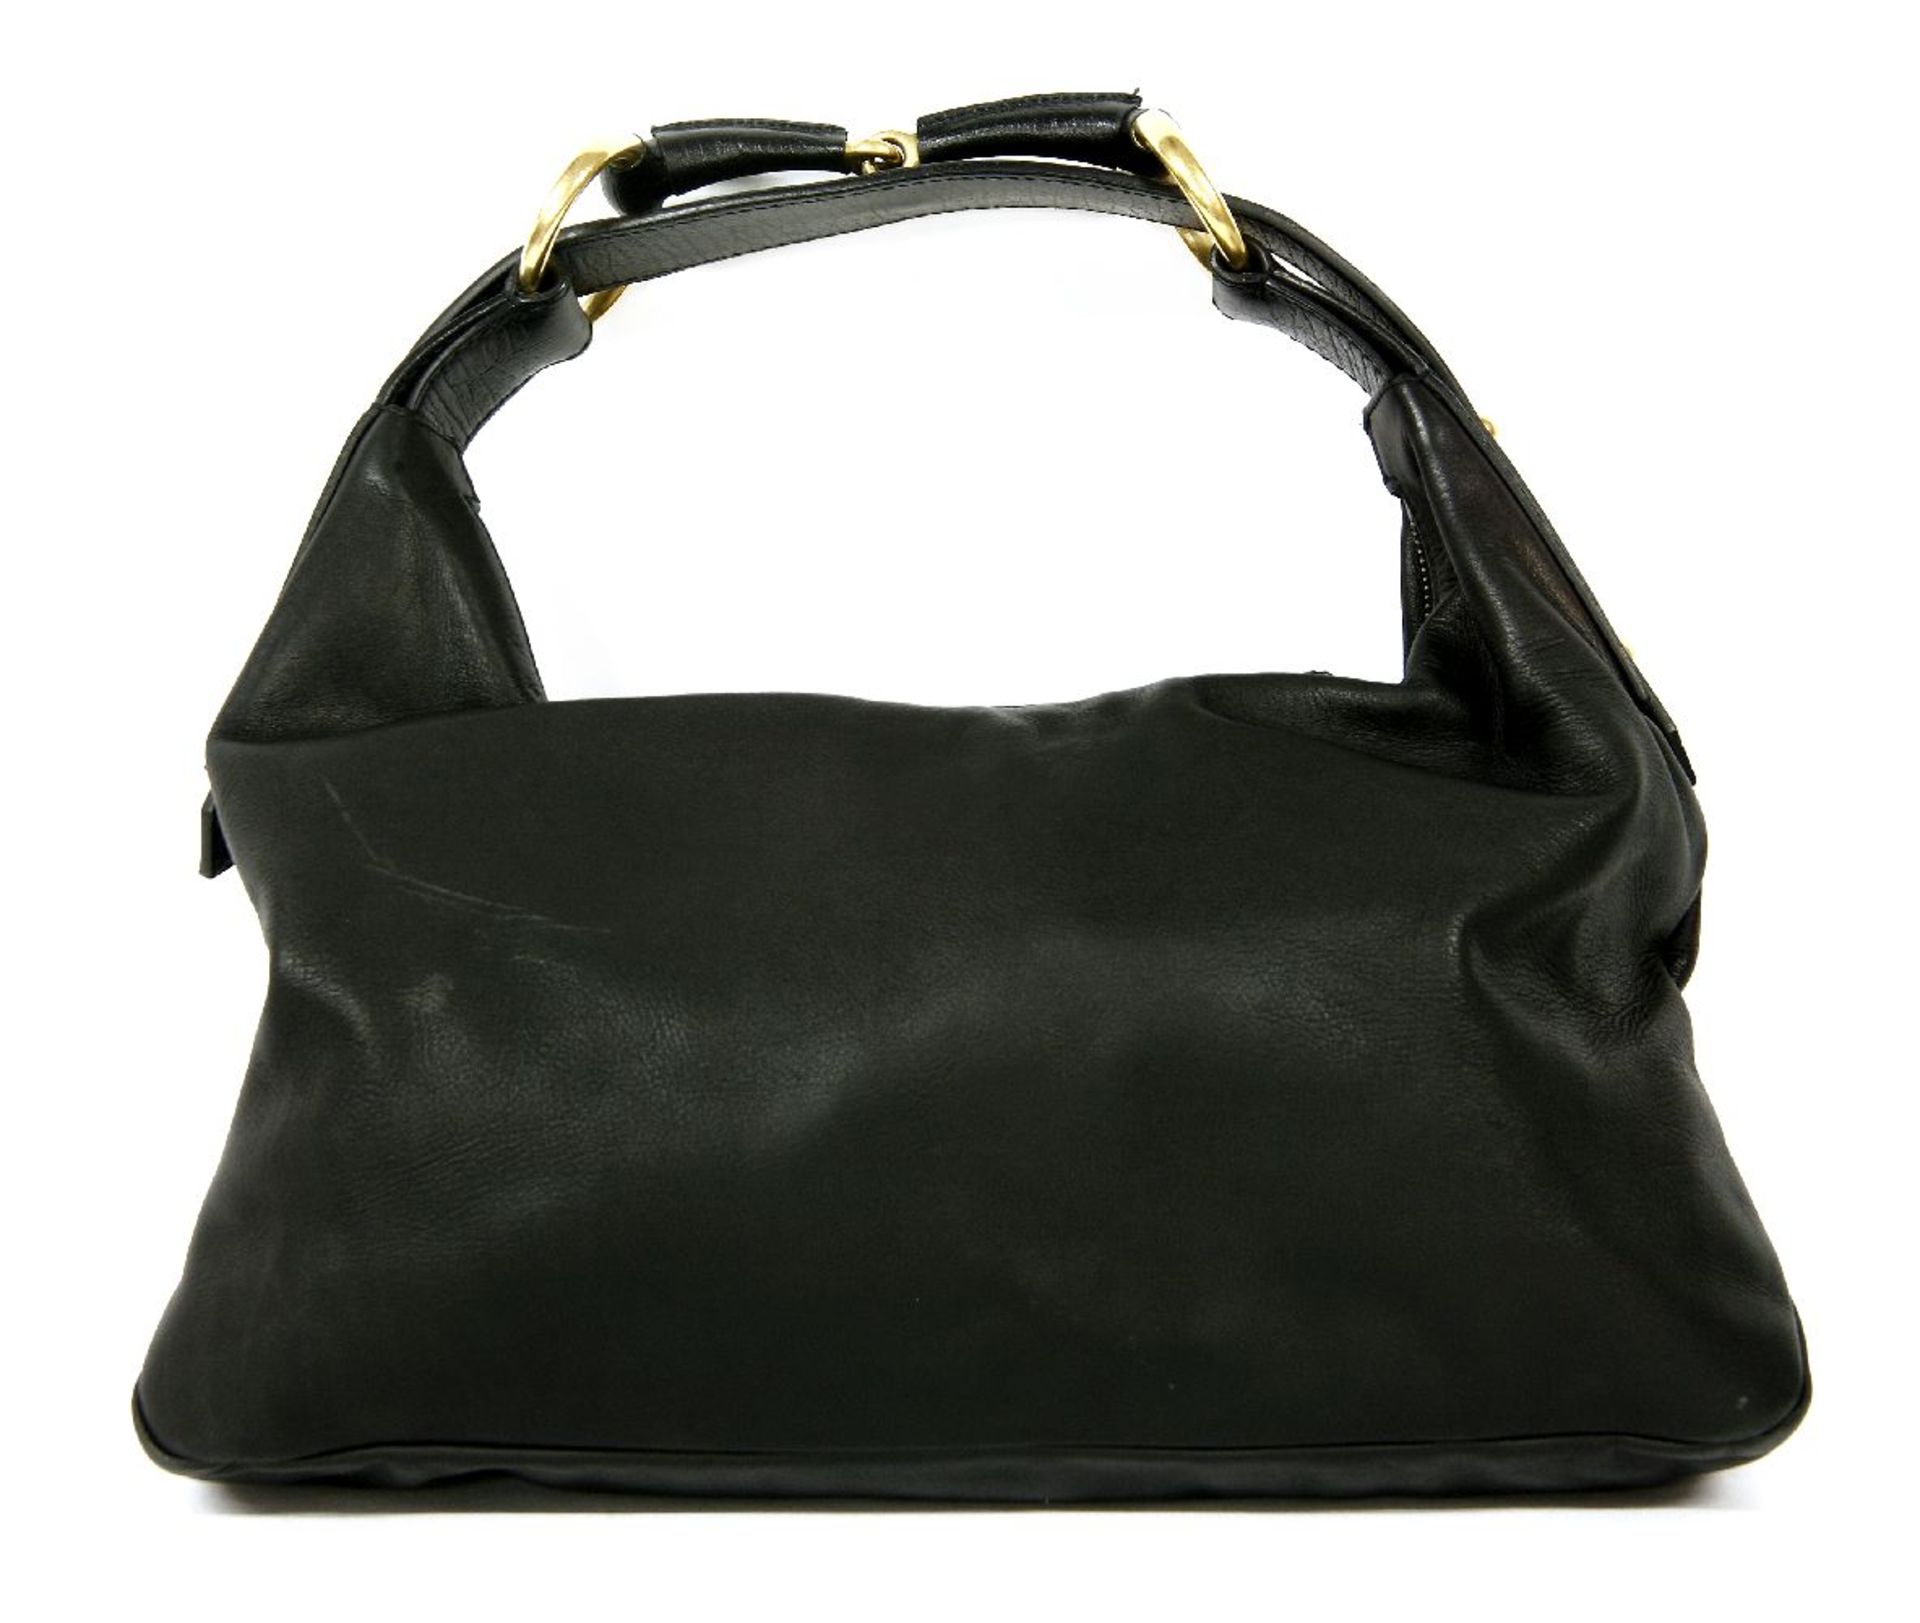 A Gucci black leather horse bit handbag, a soft black leather exterior with gold-tone horse bit to